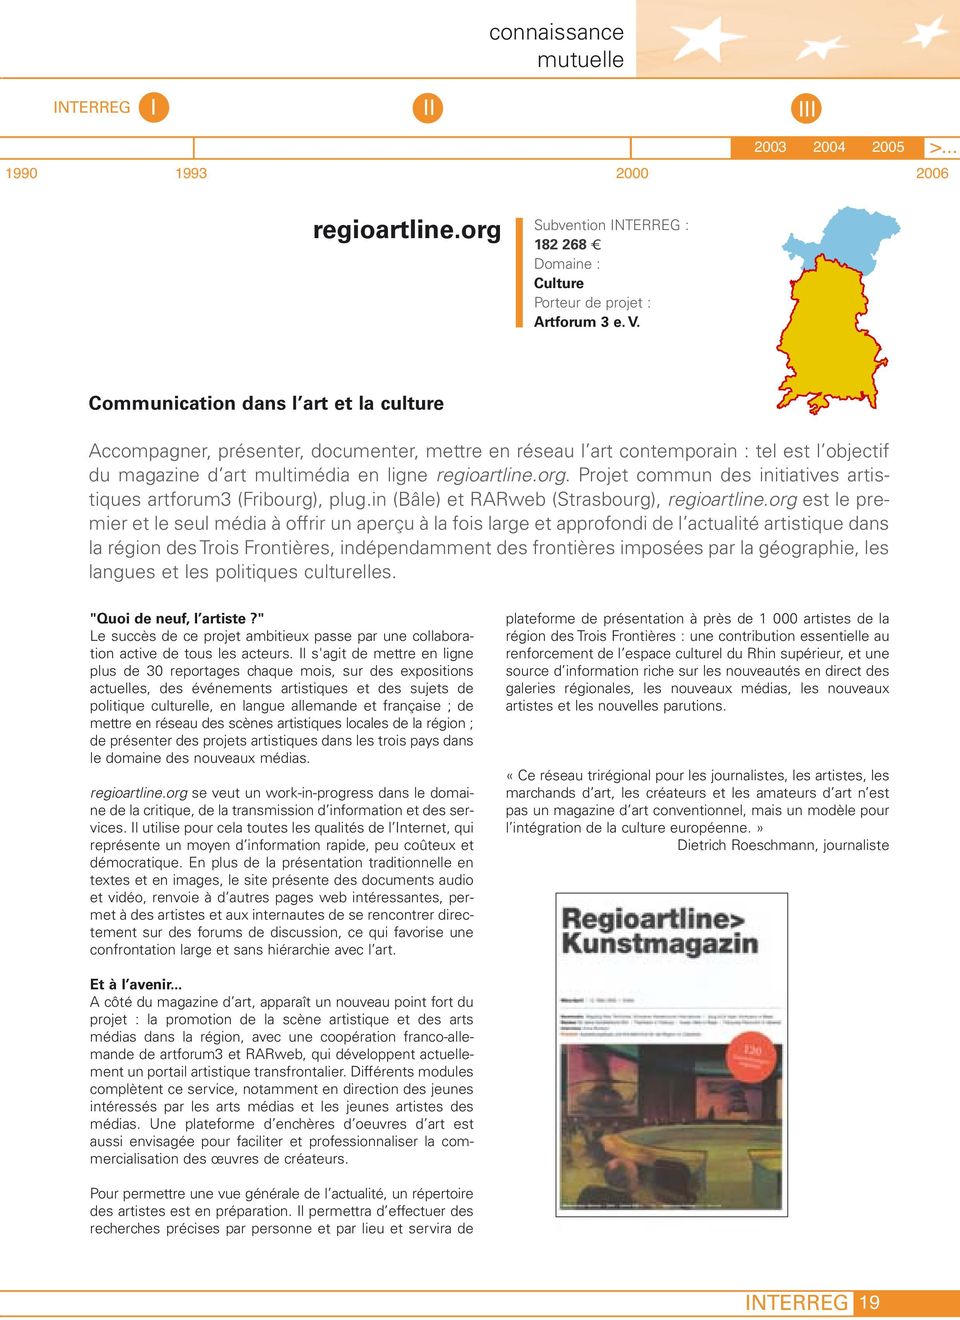 Projet commun des initiatives artistiques artforum3 (Fribourg), plug.in (Bâle) et RARweb (Strasbourg), regioartline.